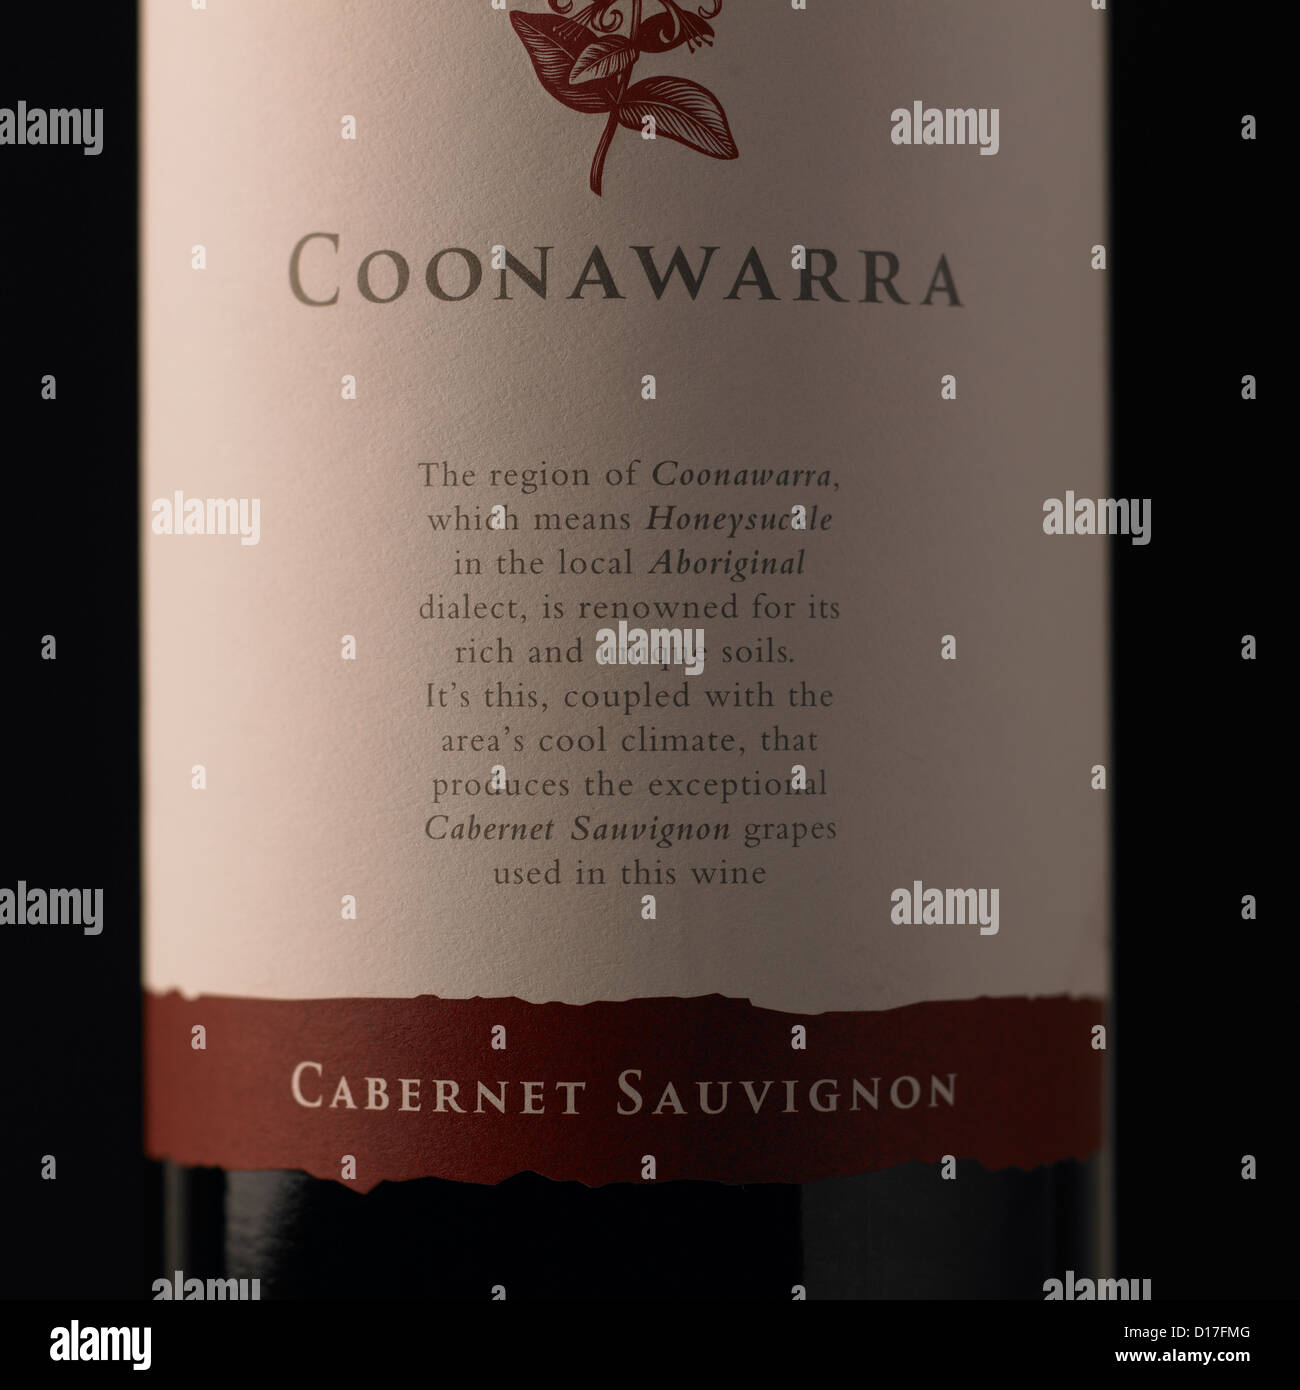 Coonawarra Cabernet Sauvignon wine bottle label closeup Stock Photo